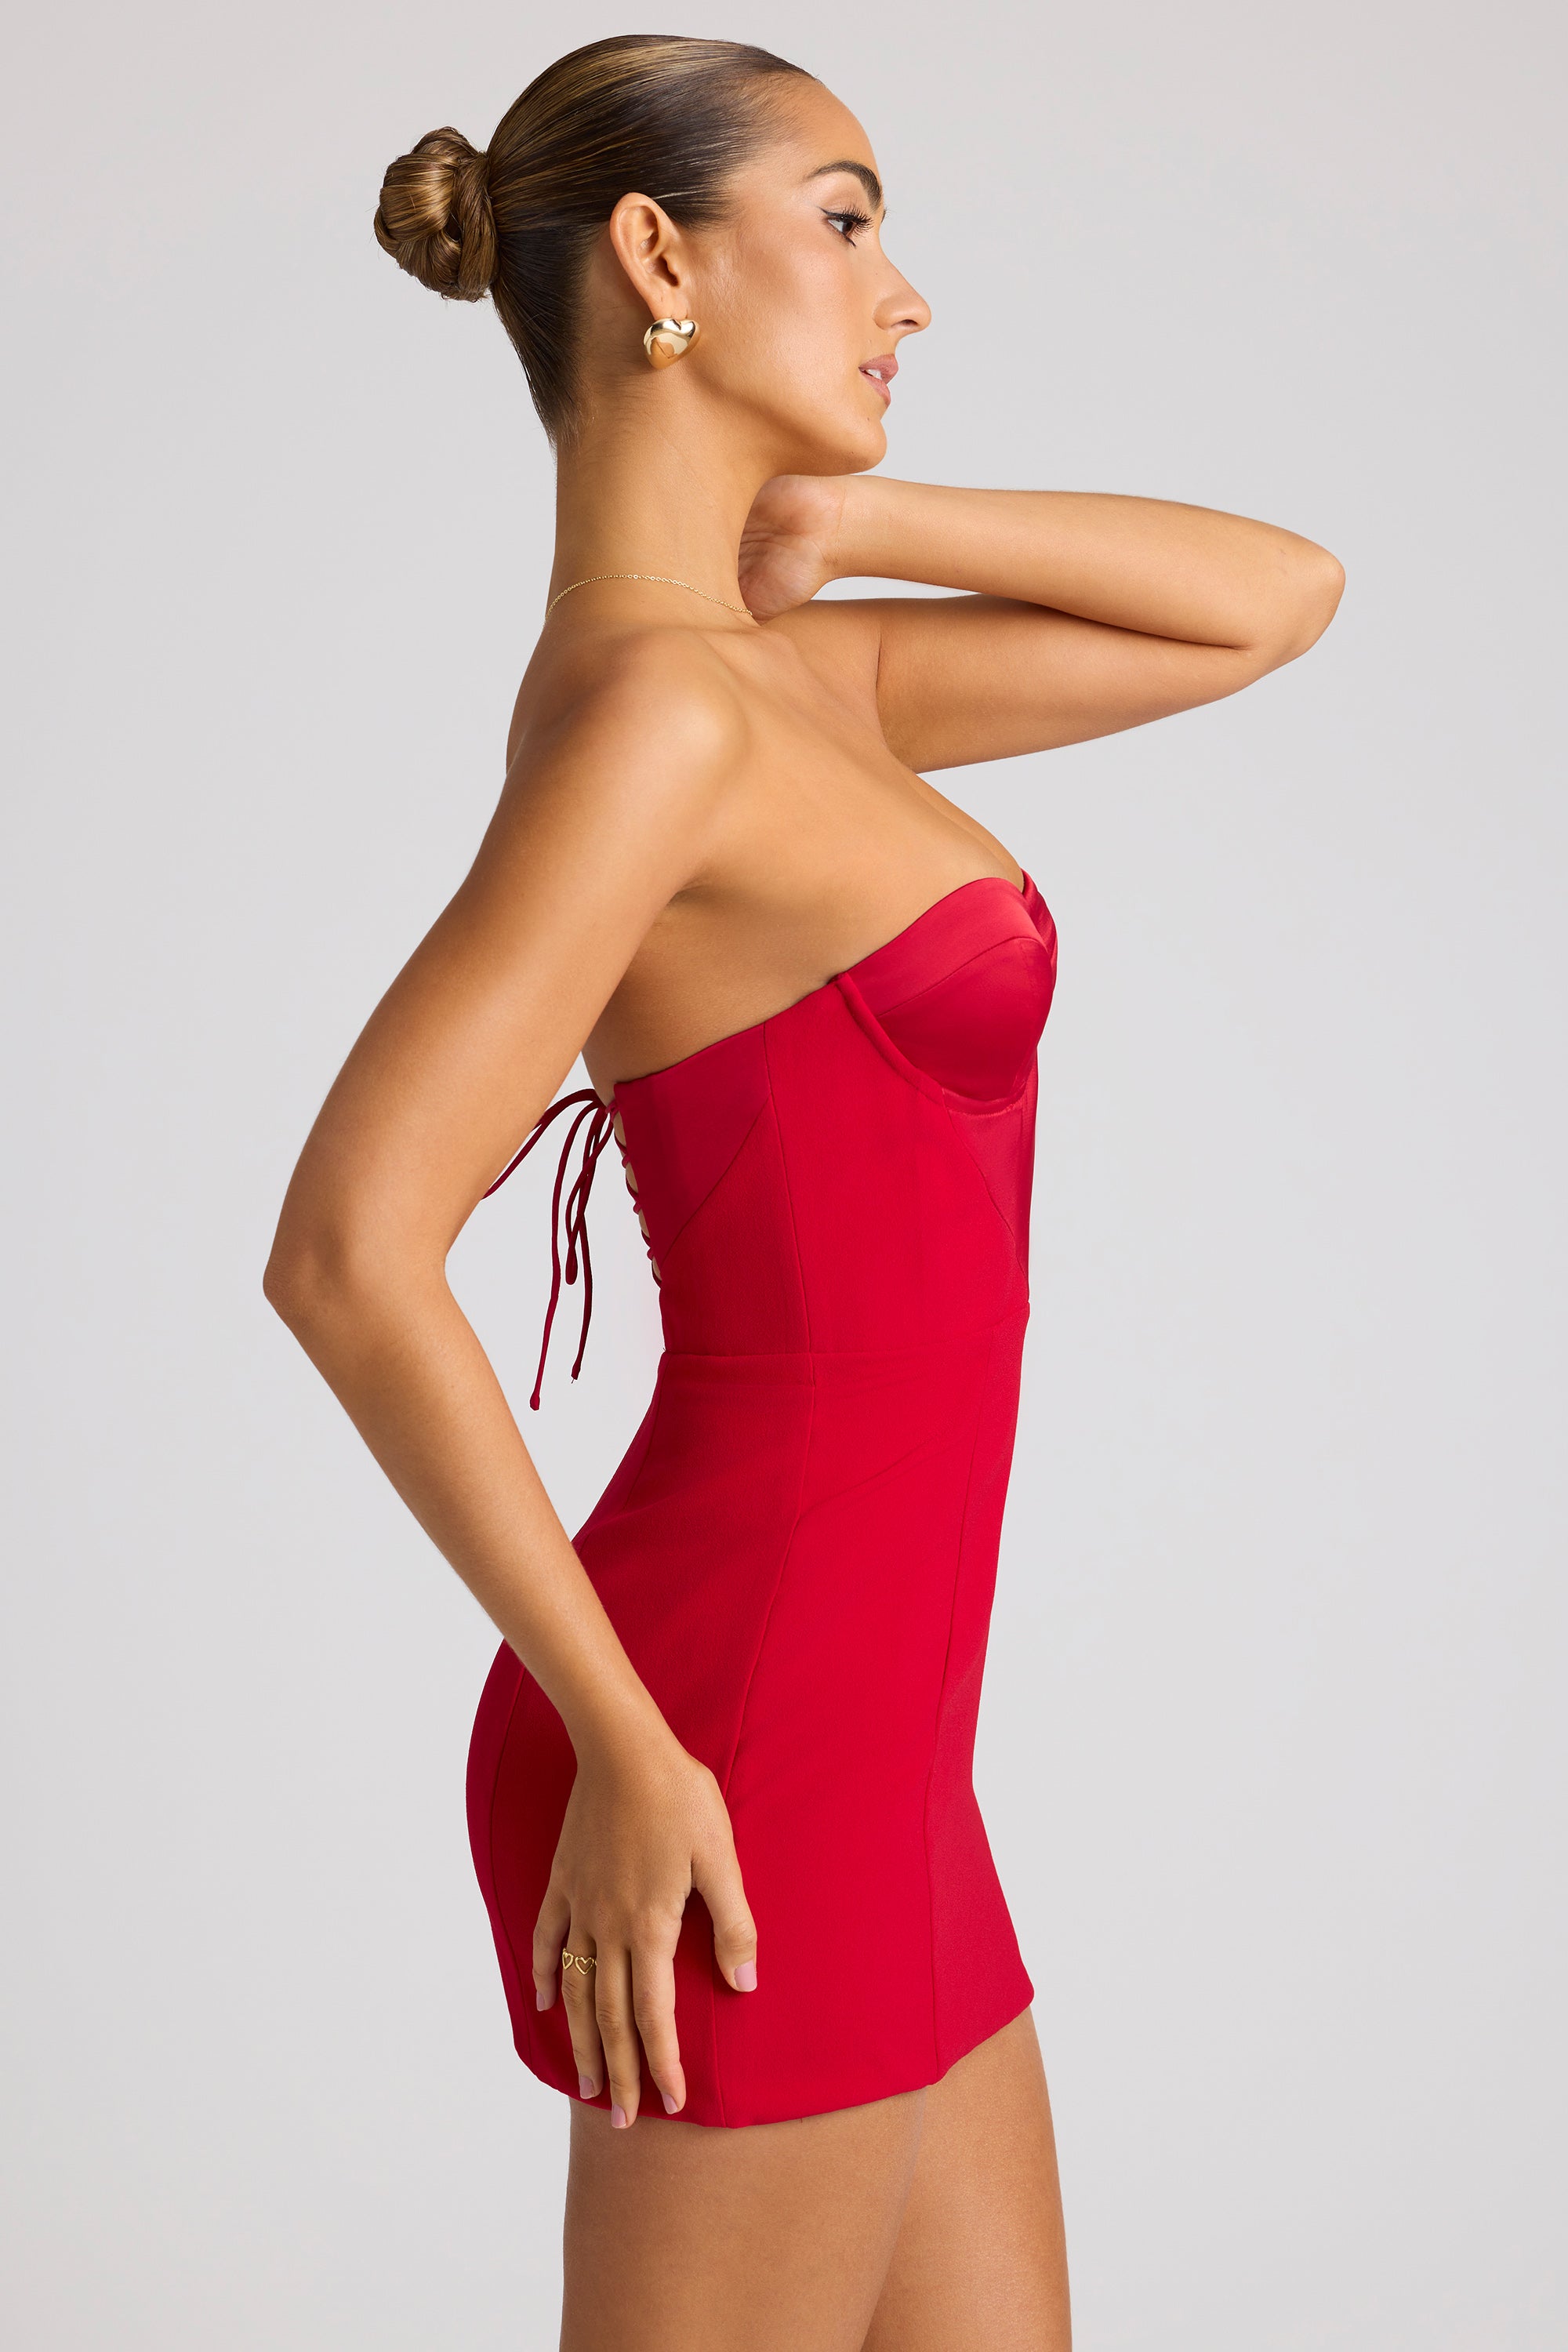 red strapless mini dress